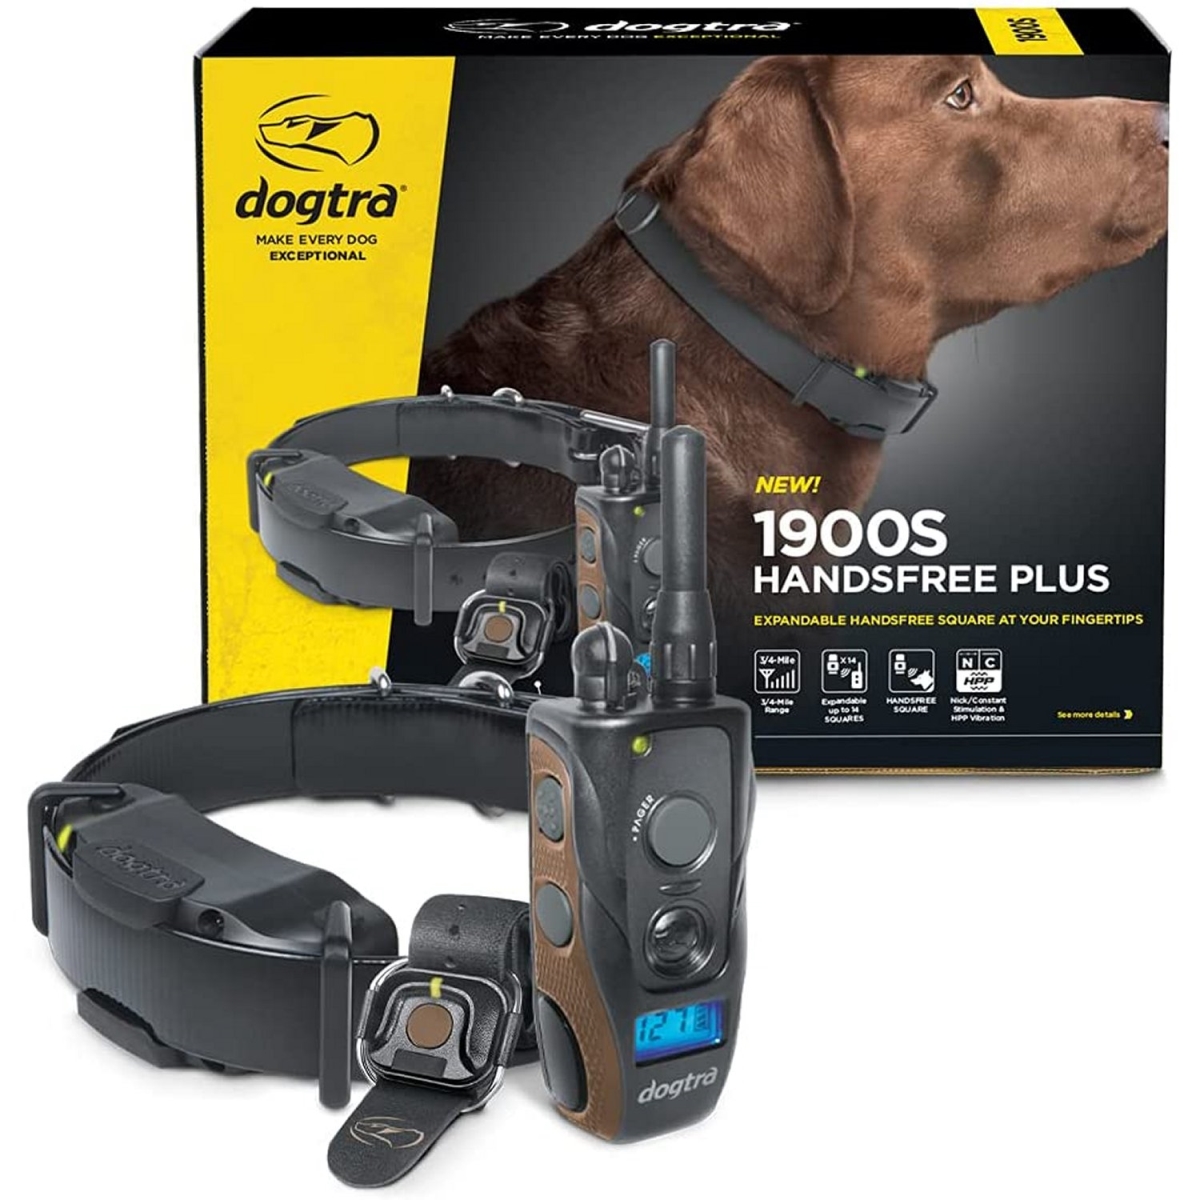 Dogtra 1900S HANDSFREE PLUS Dog Training Collar